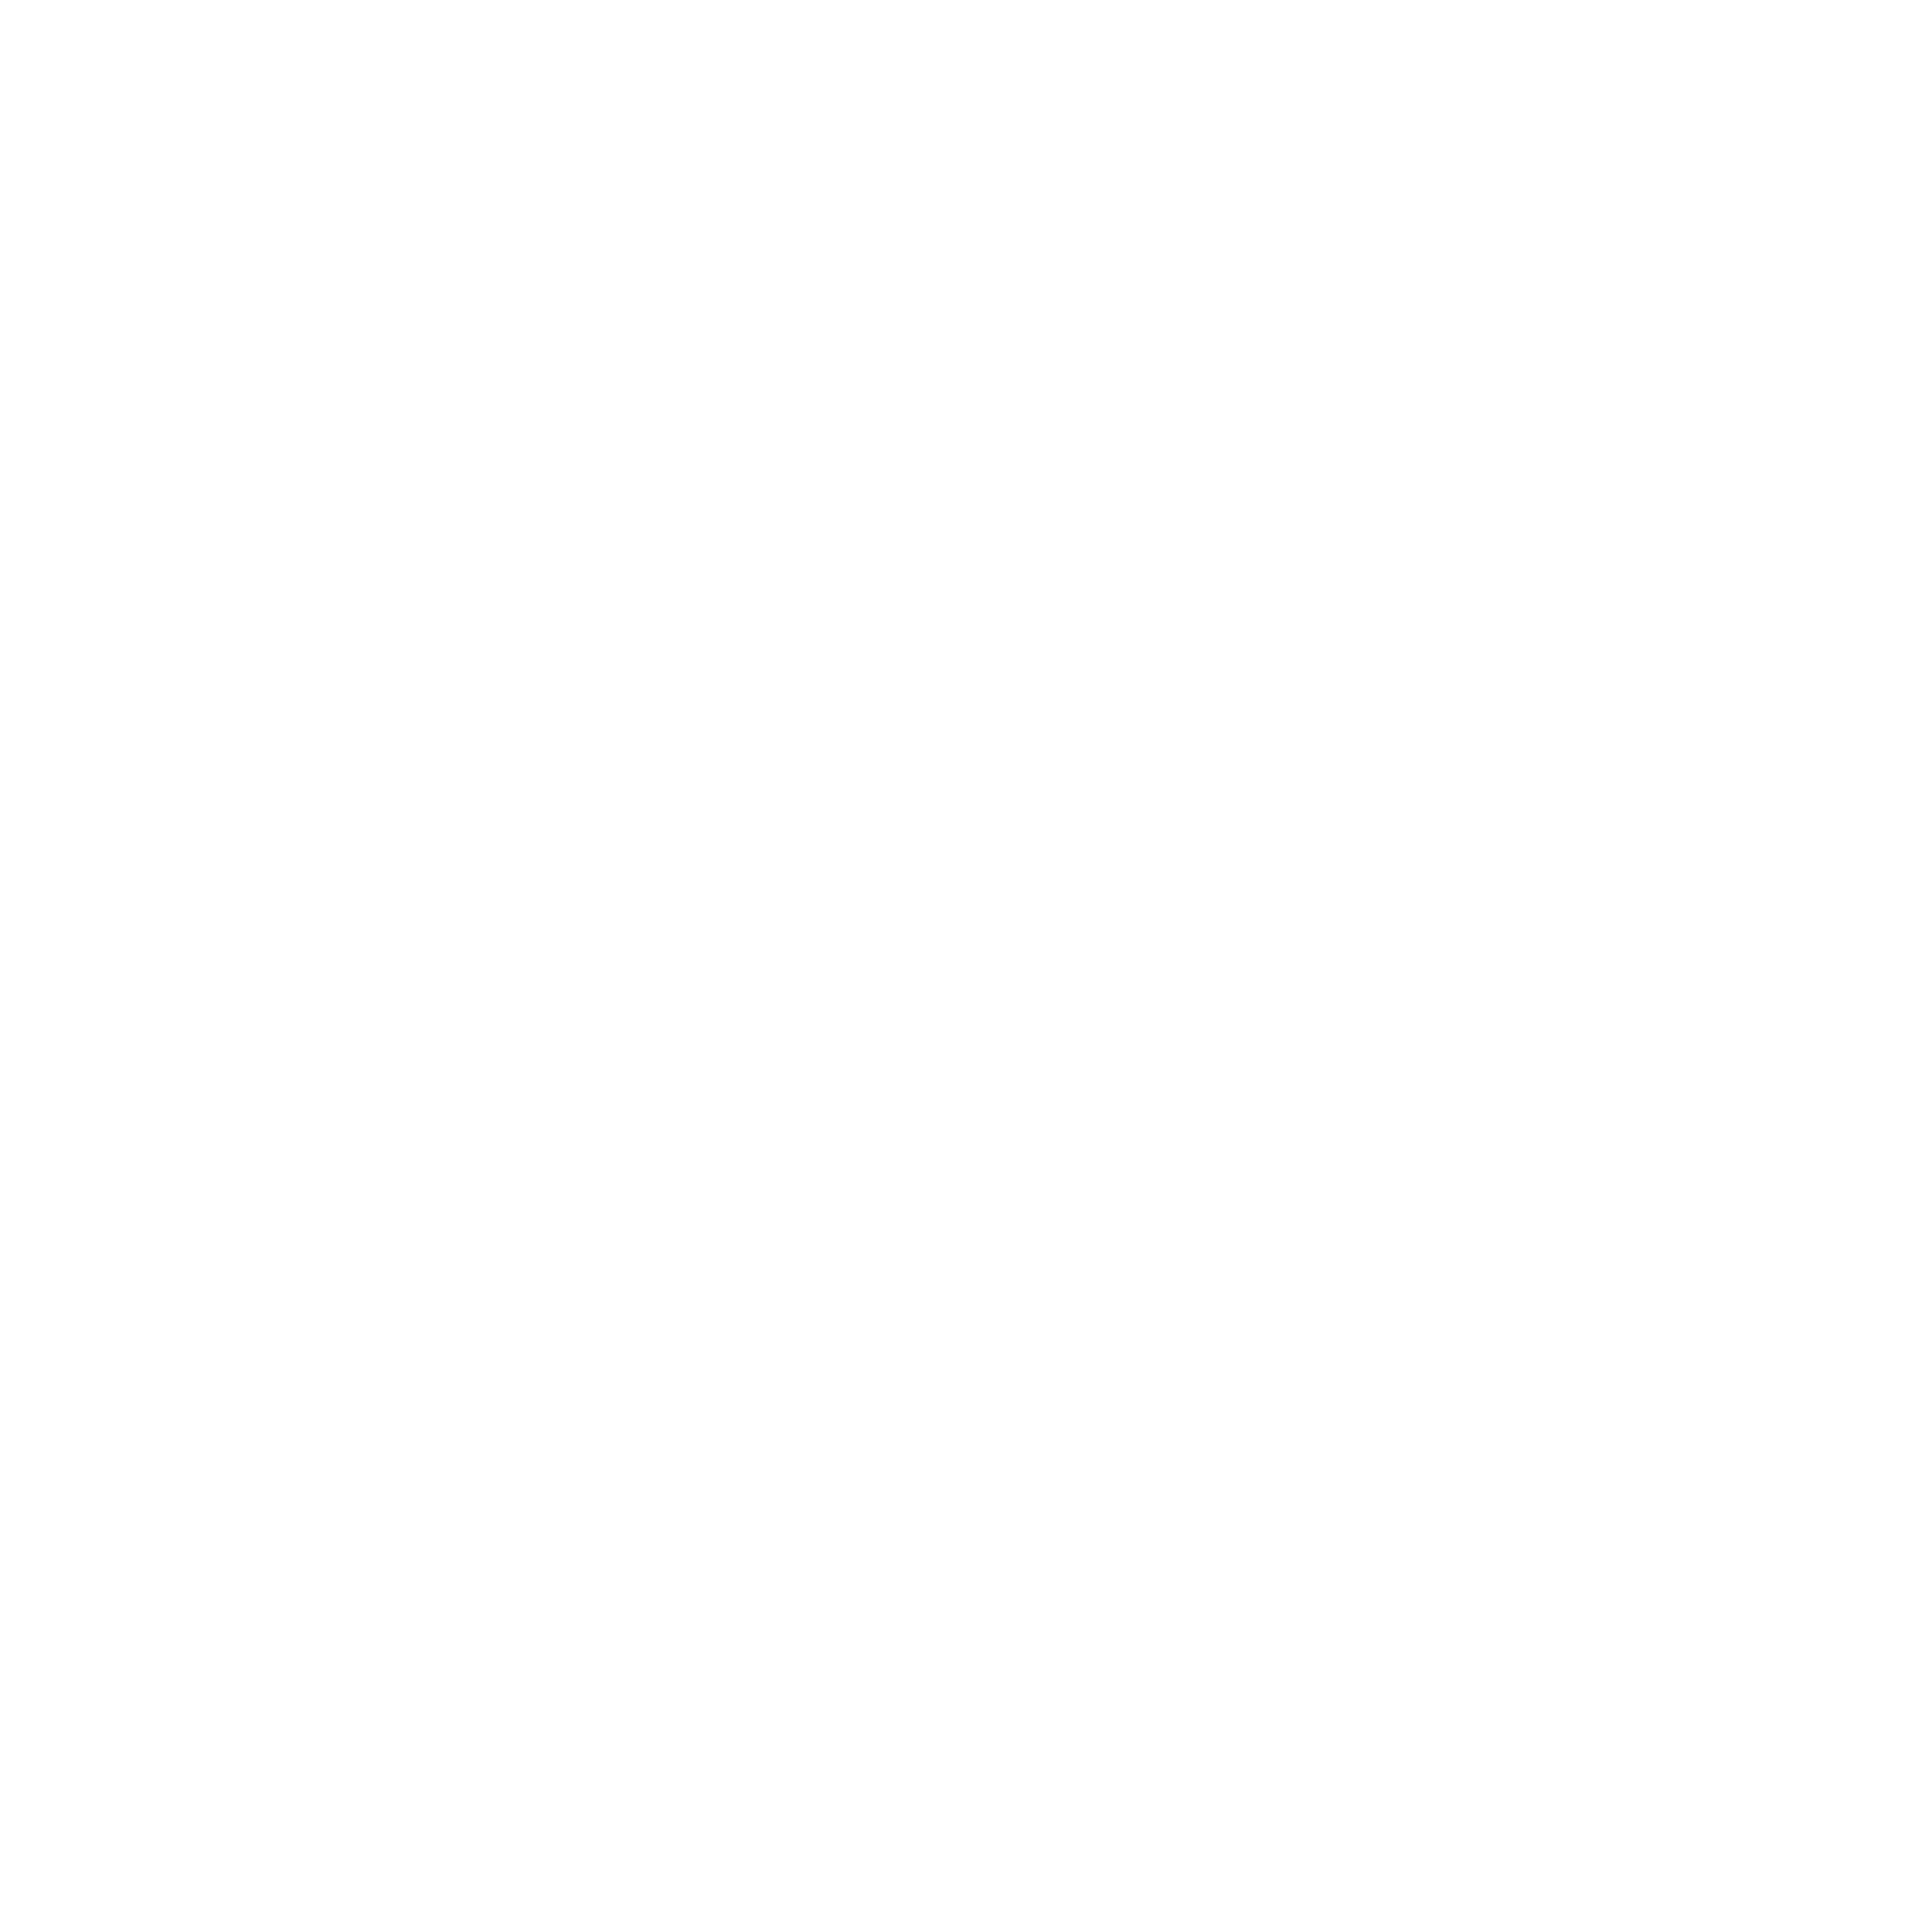 Modine Logo - Modine Logo PNG Transparent & SVG Vector